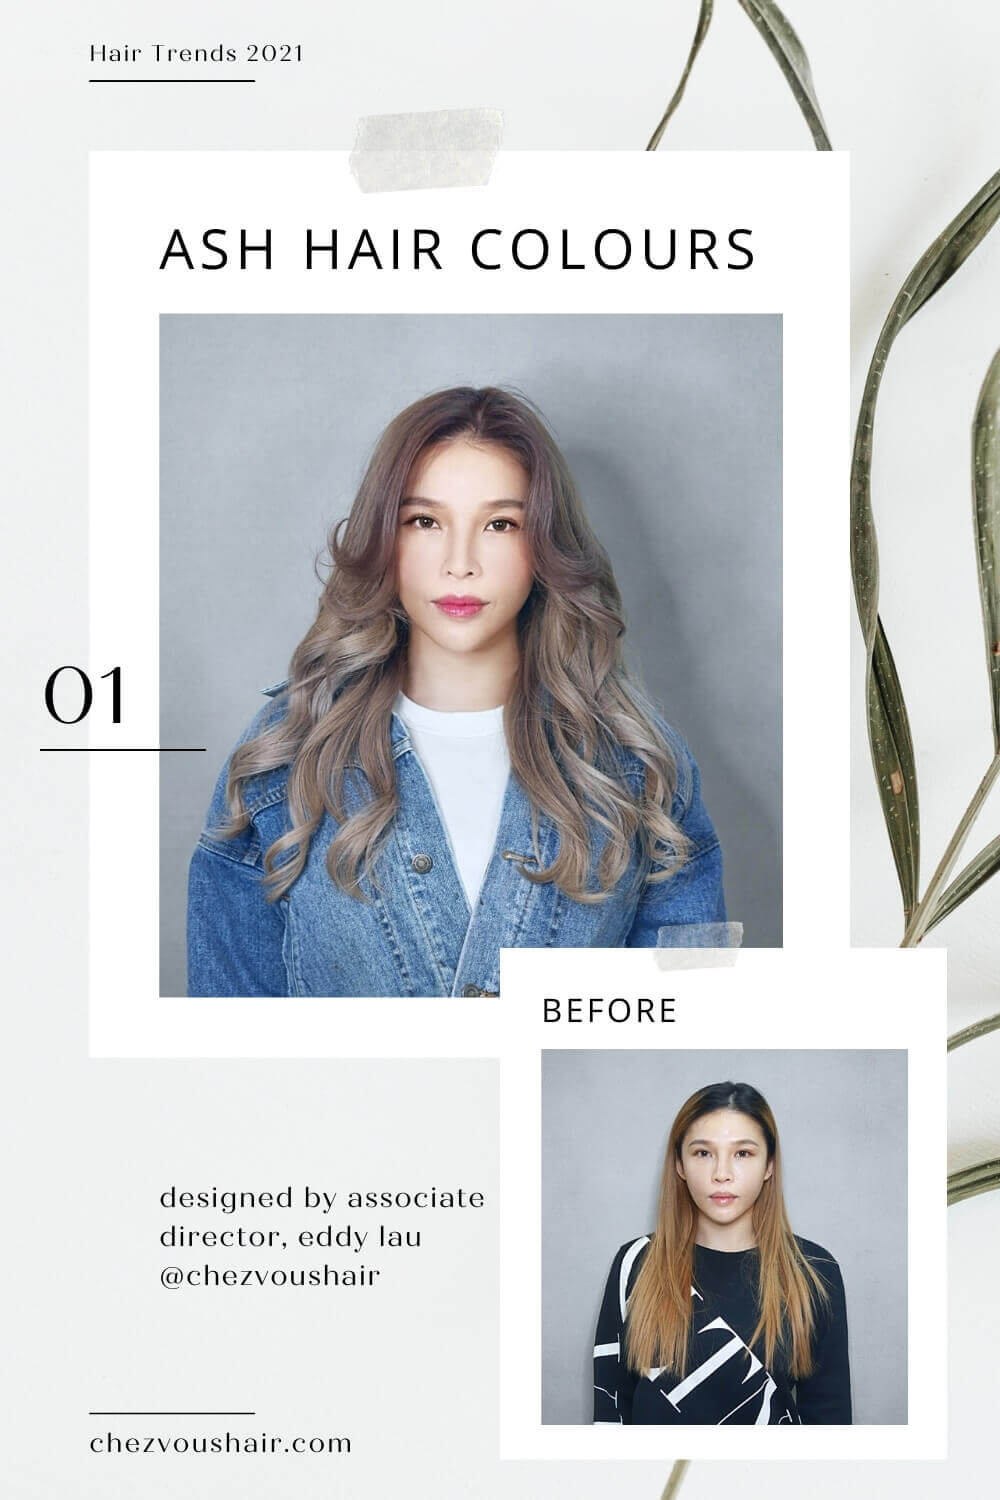 Hair Trends 2021: Ash Hair Isn’t Going Anywhere Soon